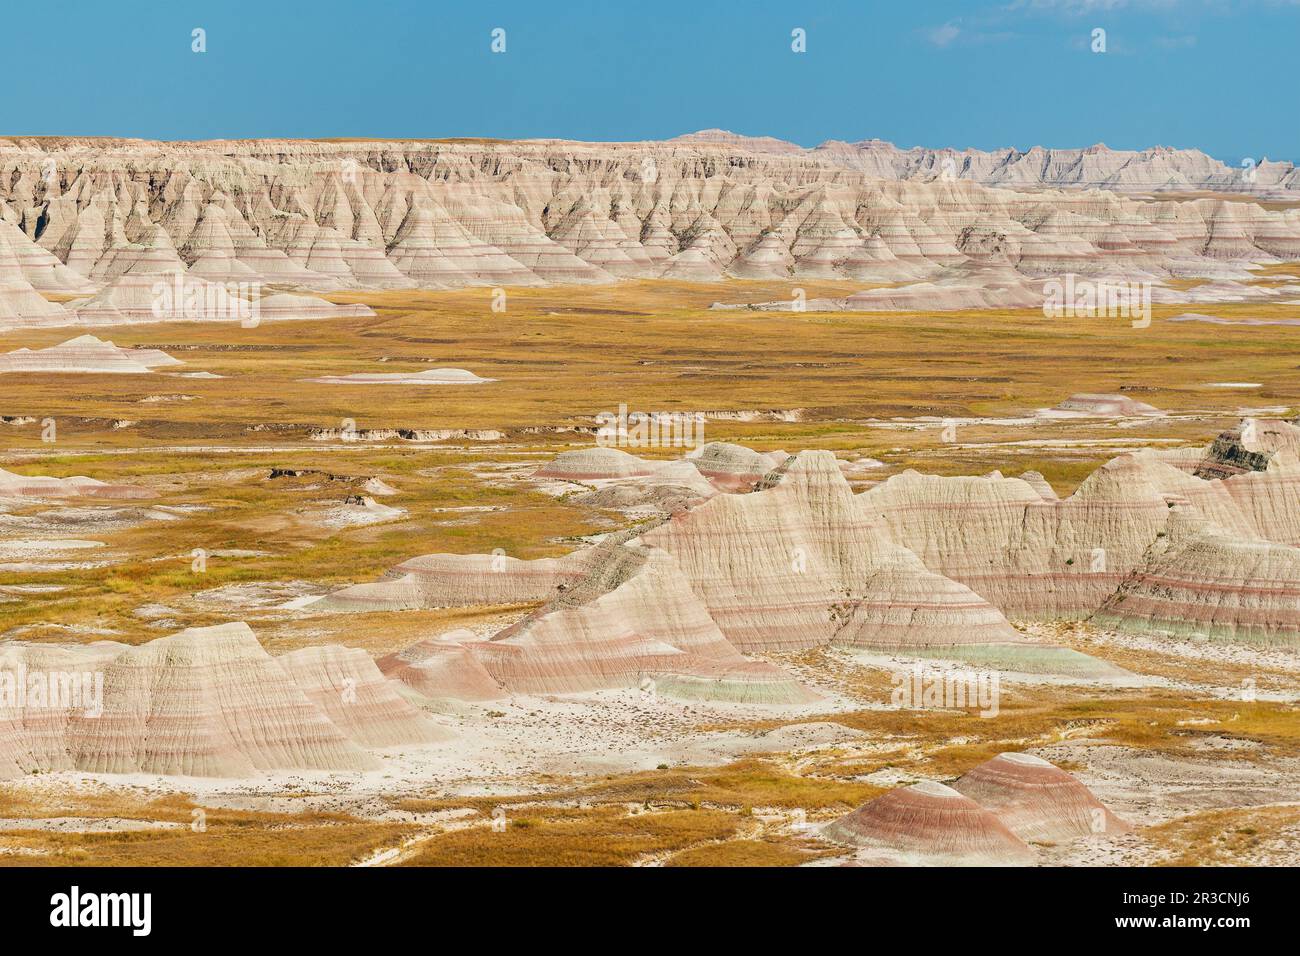 Badlands landscape with rock stratification geology at sunset, Badlands national park, South Dakota, USA. Stock Photo